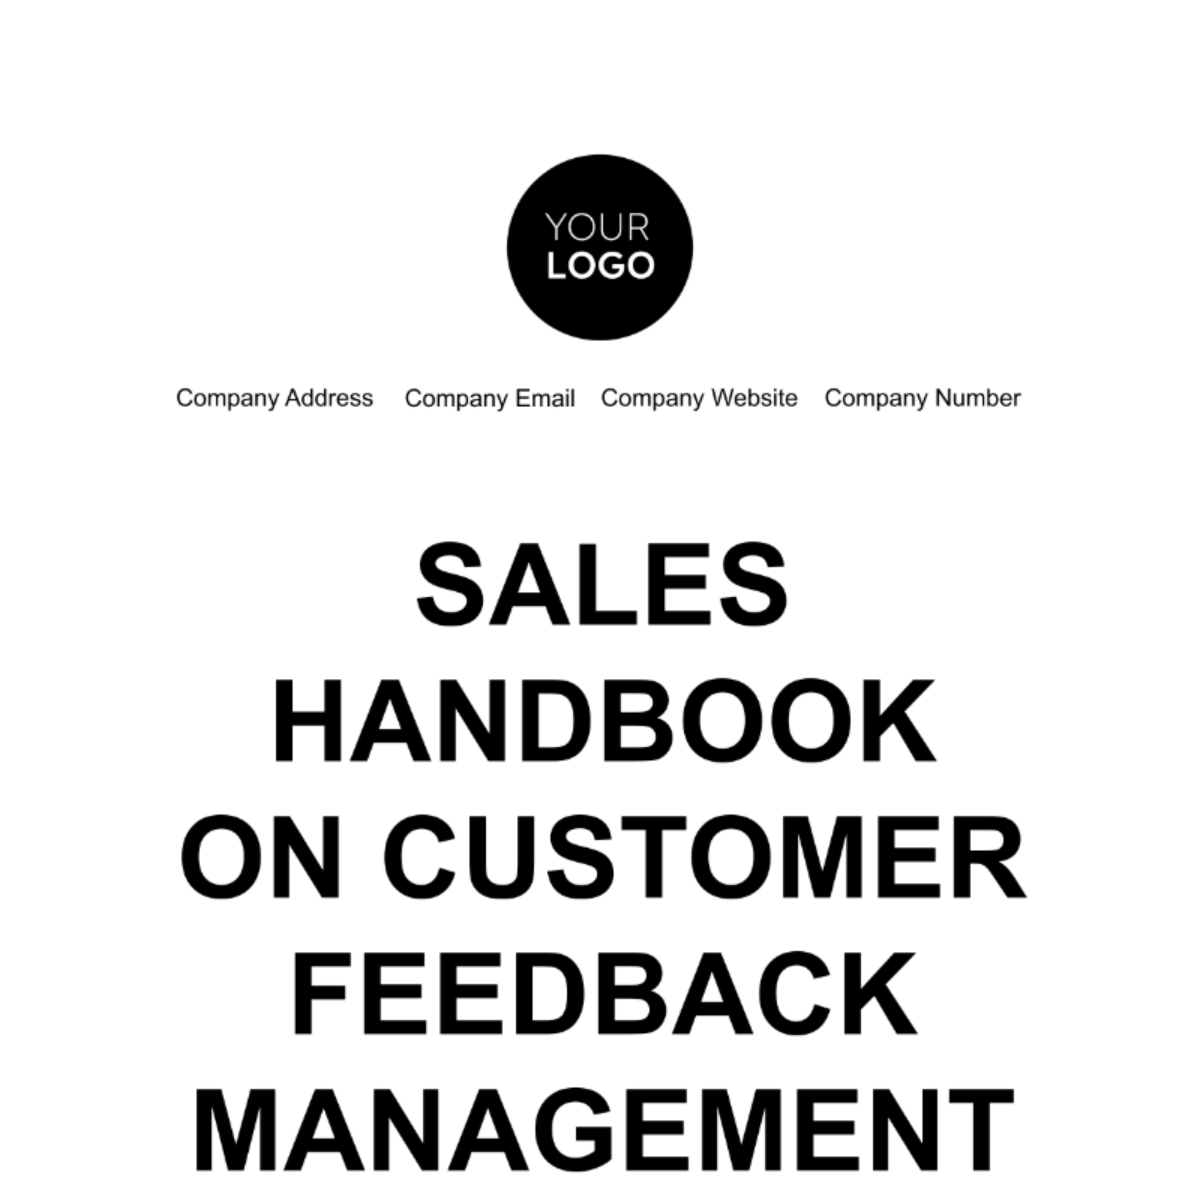 Sales Handbook on Customer Feedback Management Template